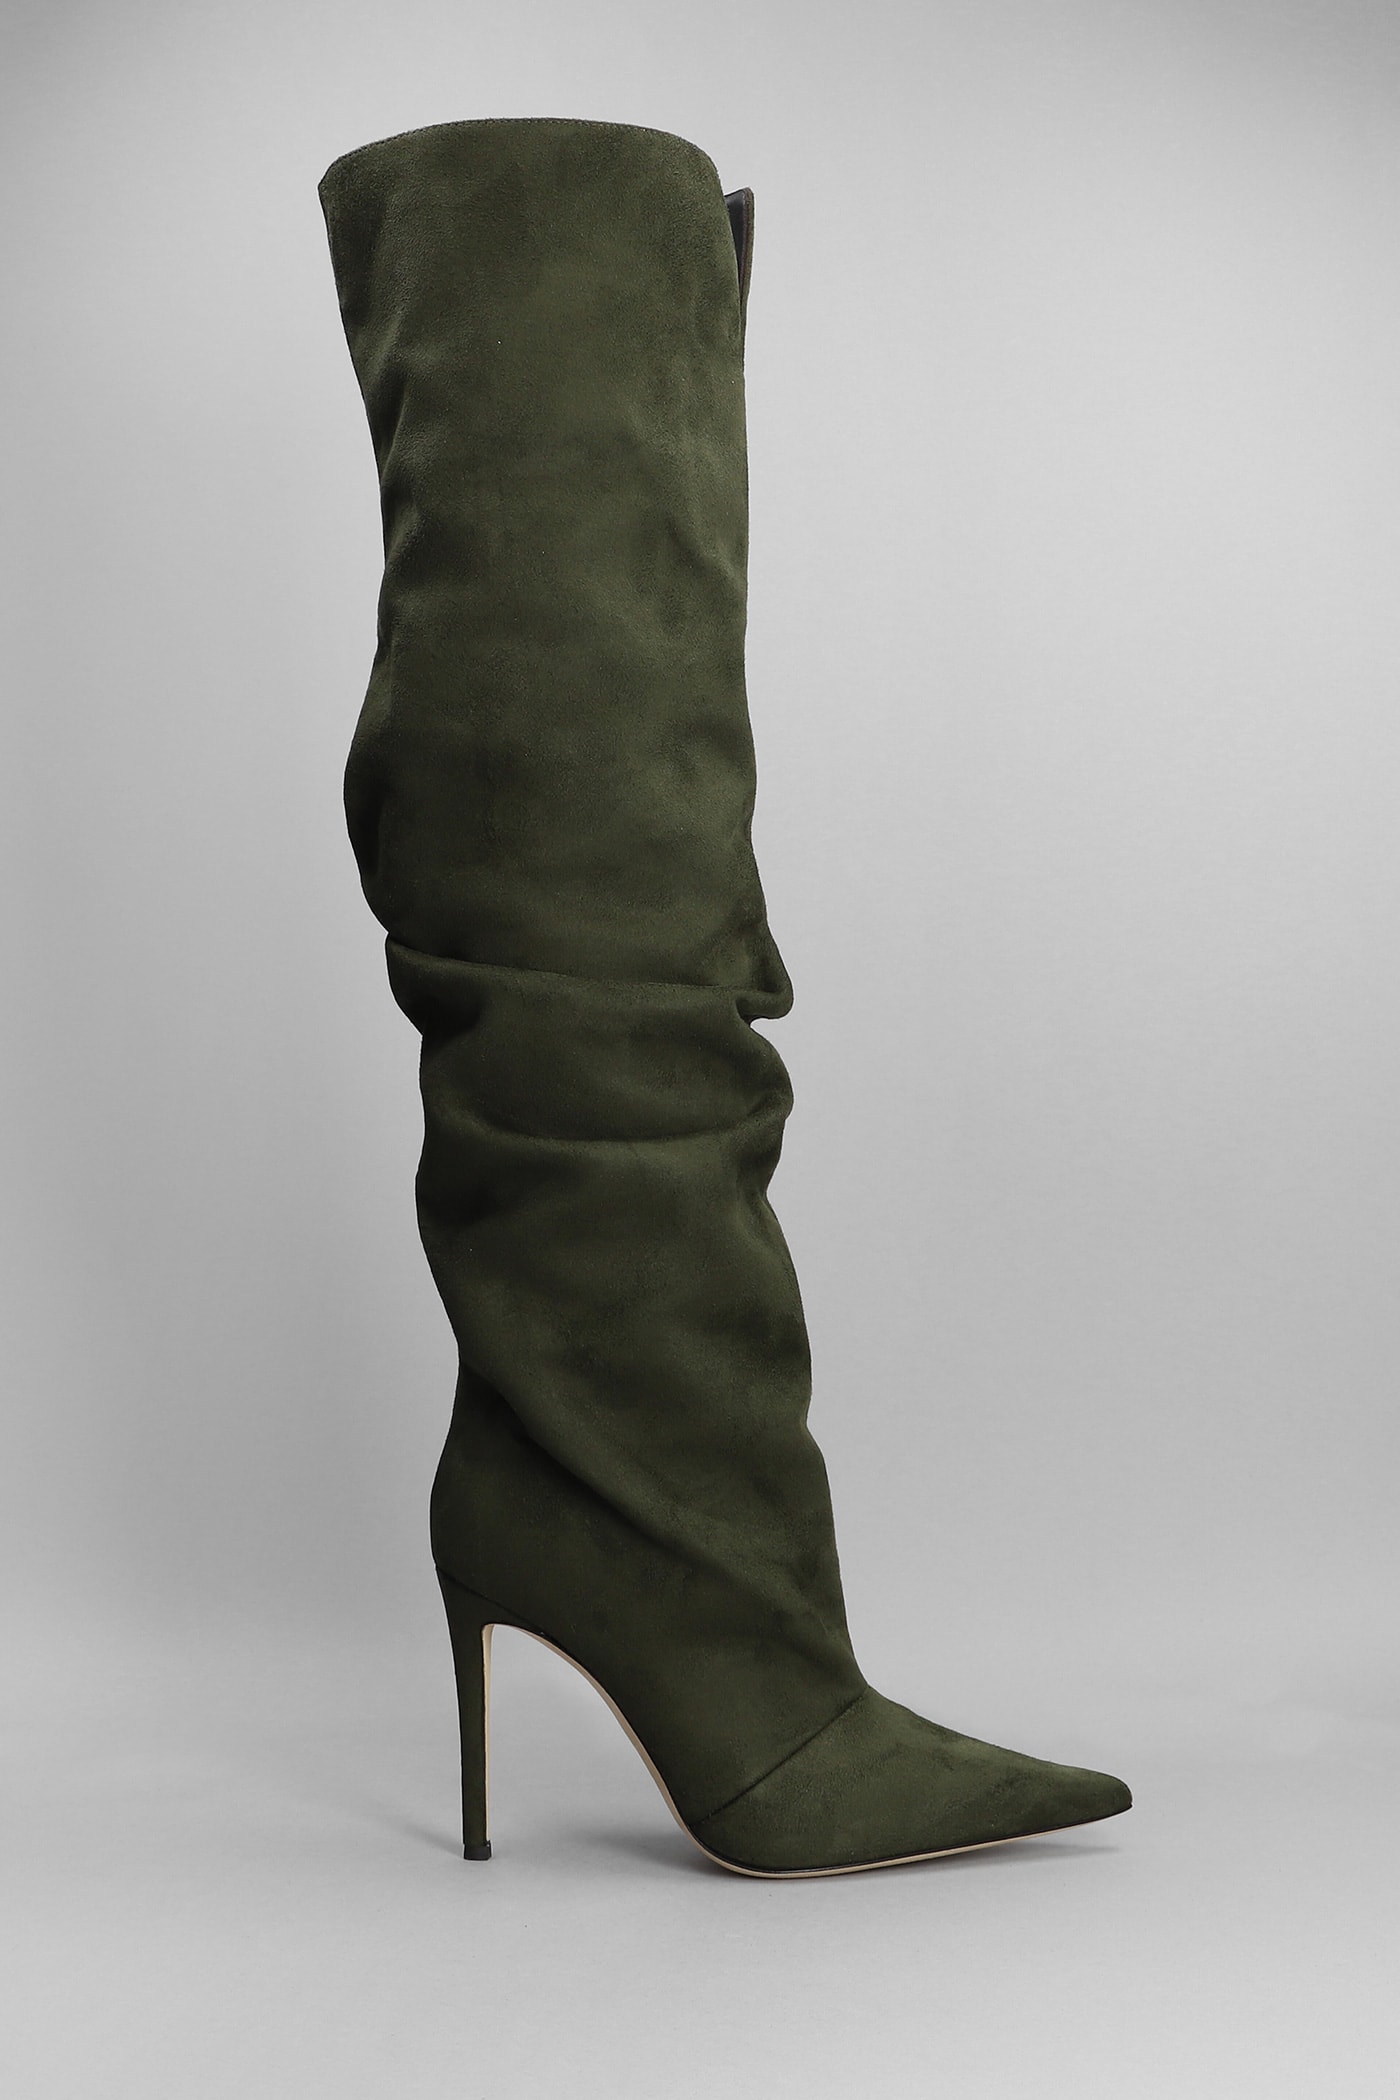 Giuseppe Zanotti High Heels Boots In Green Suede